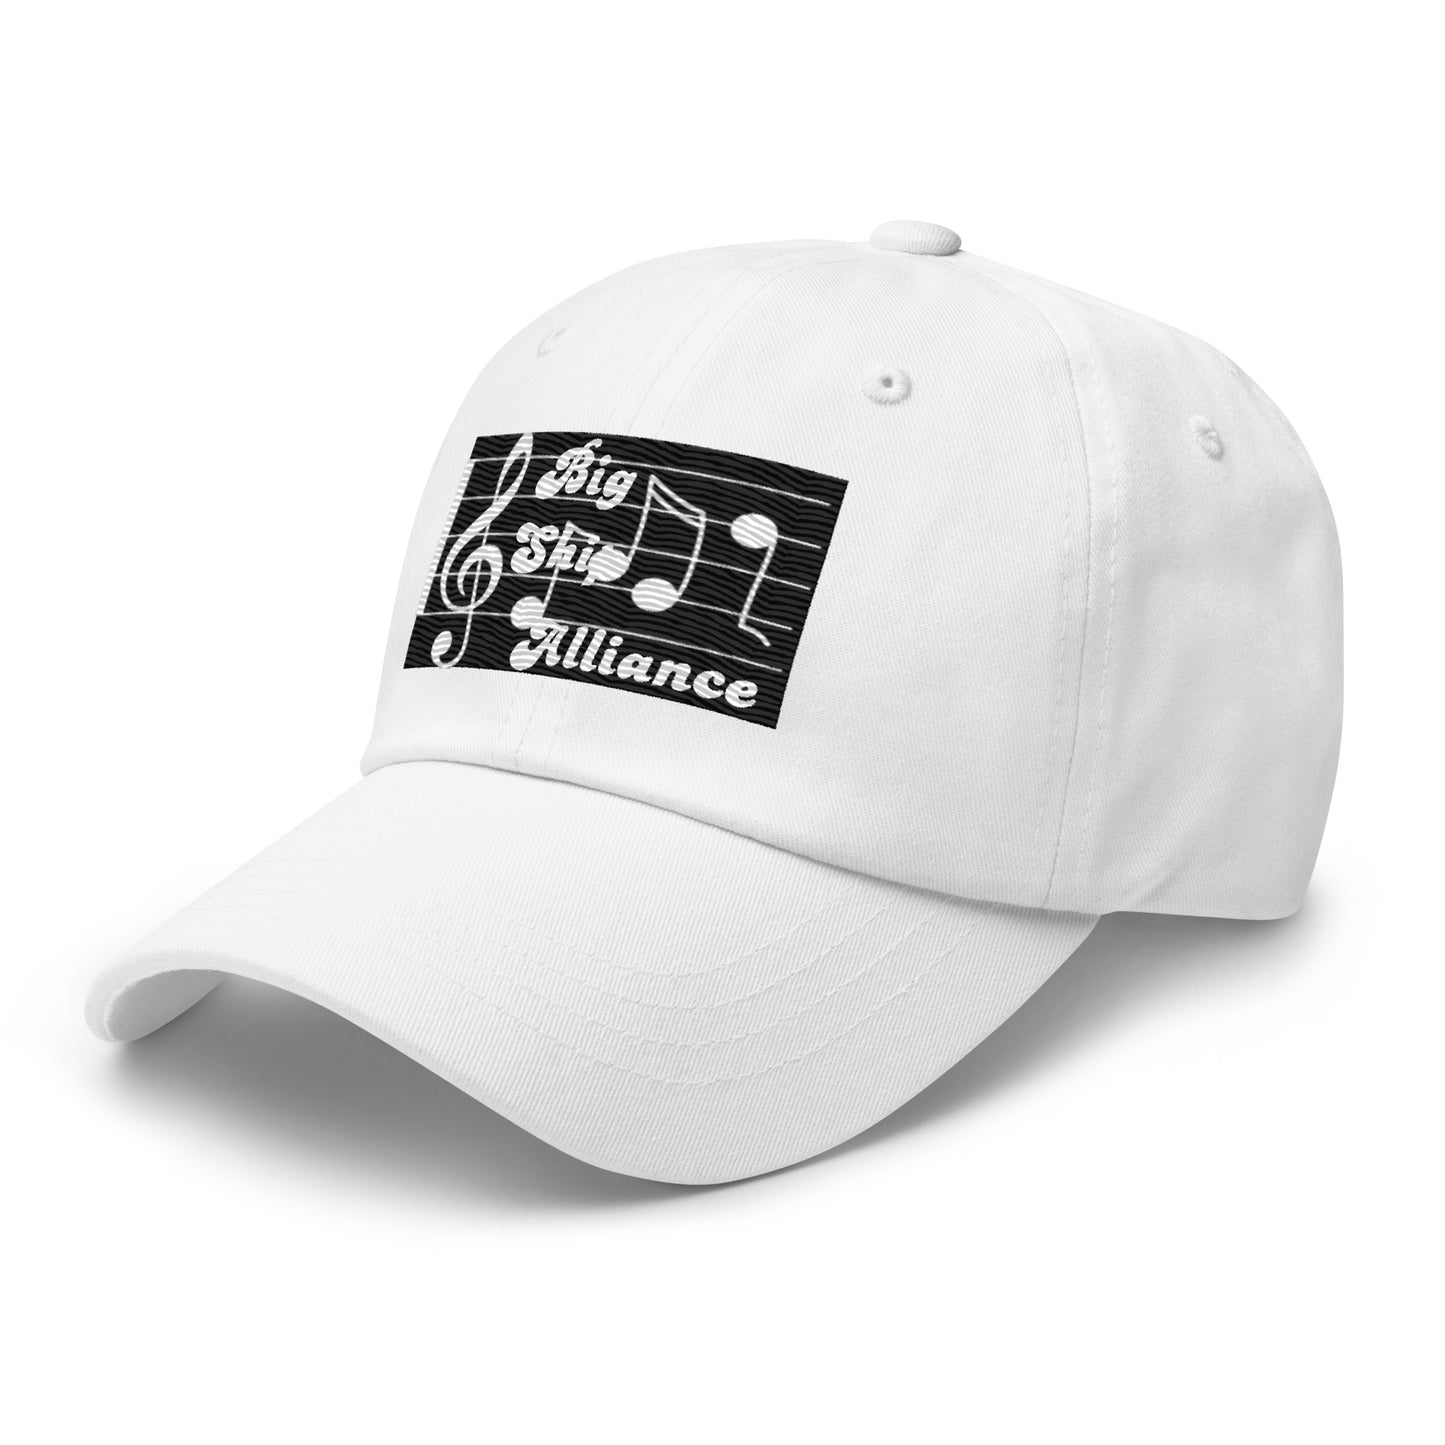 Embroidered Dad hat - Big Ship Alliance